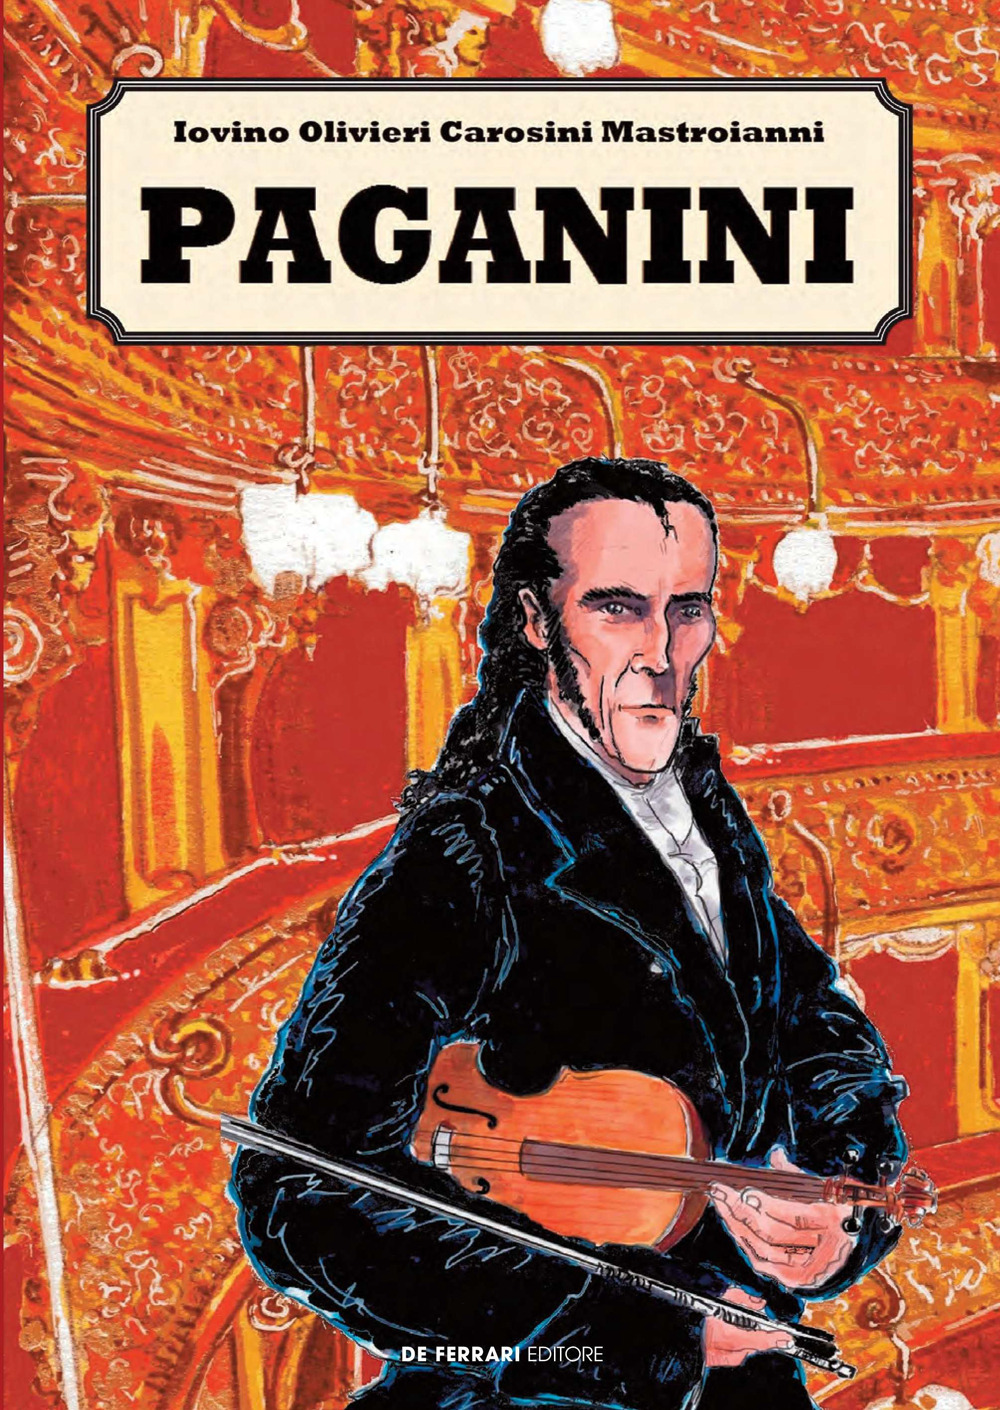 Paganini